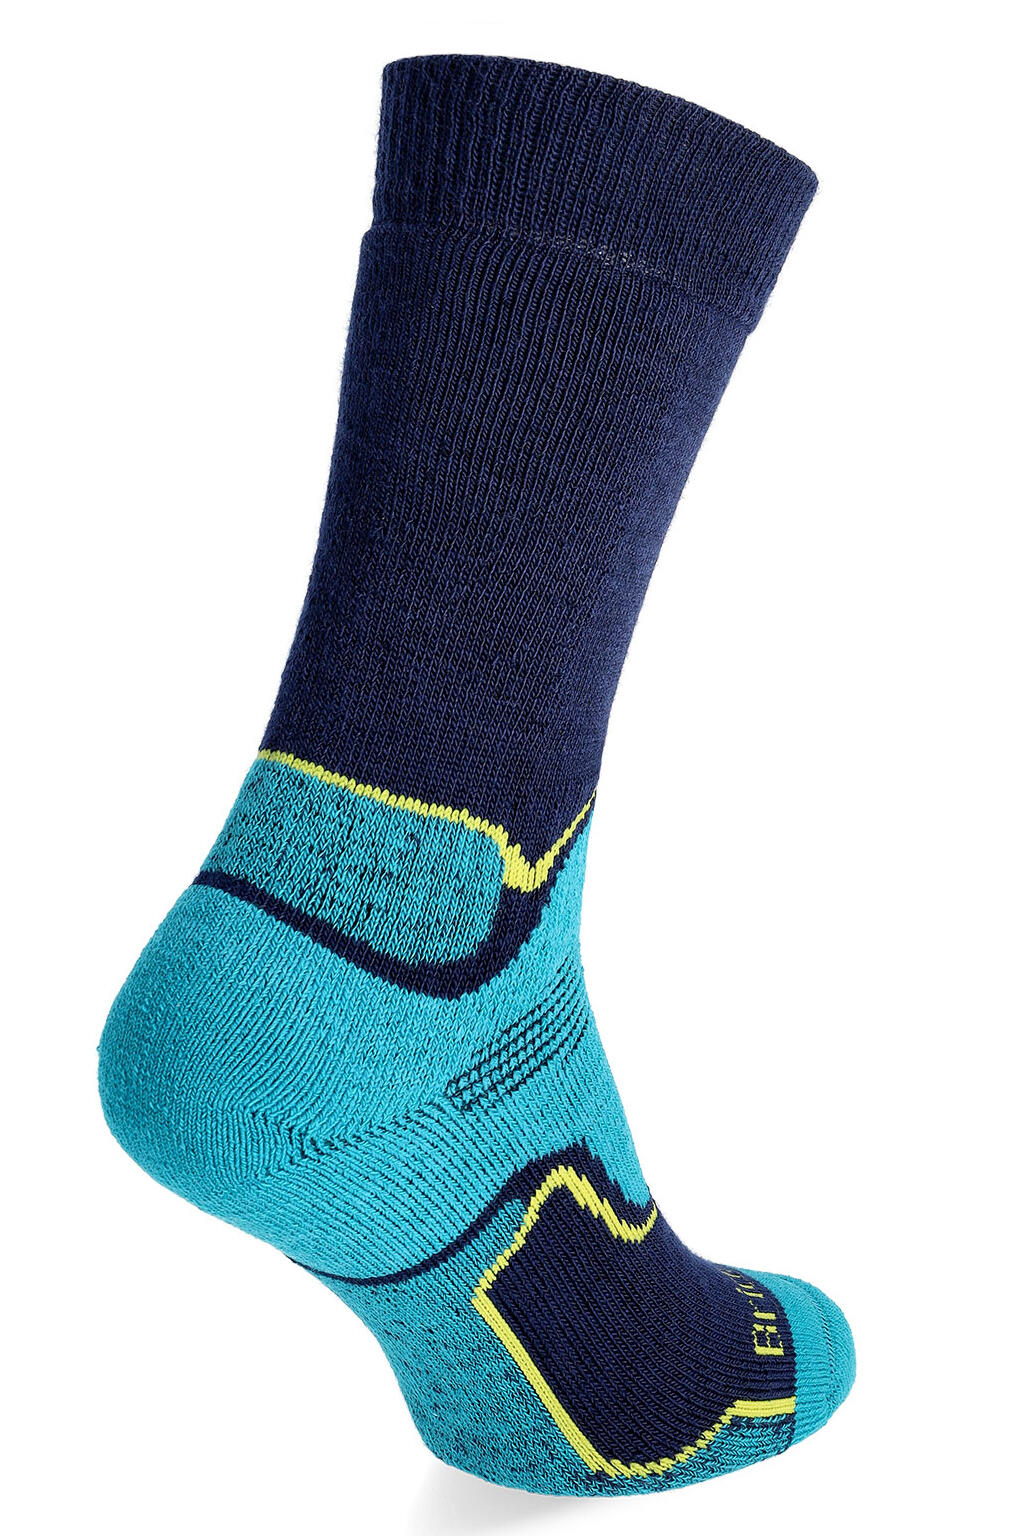 Mens Hiking Midweight Merino Wool Performance Boot Socks 3/5